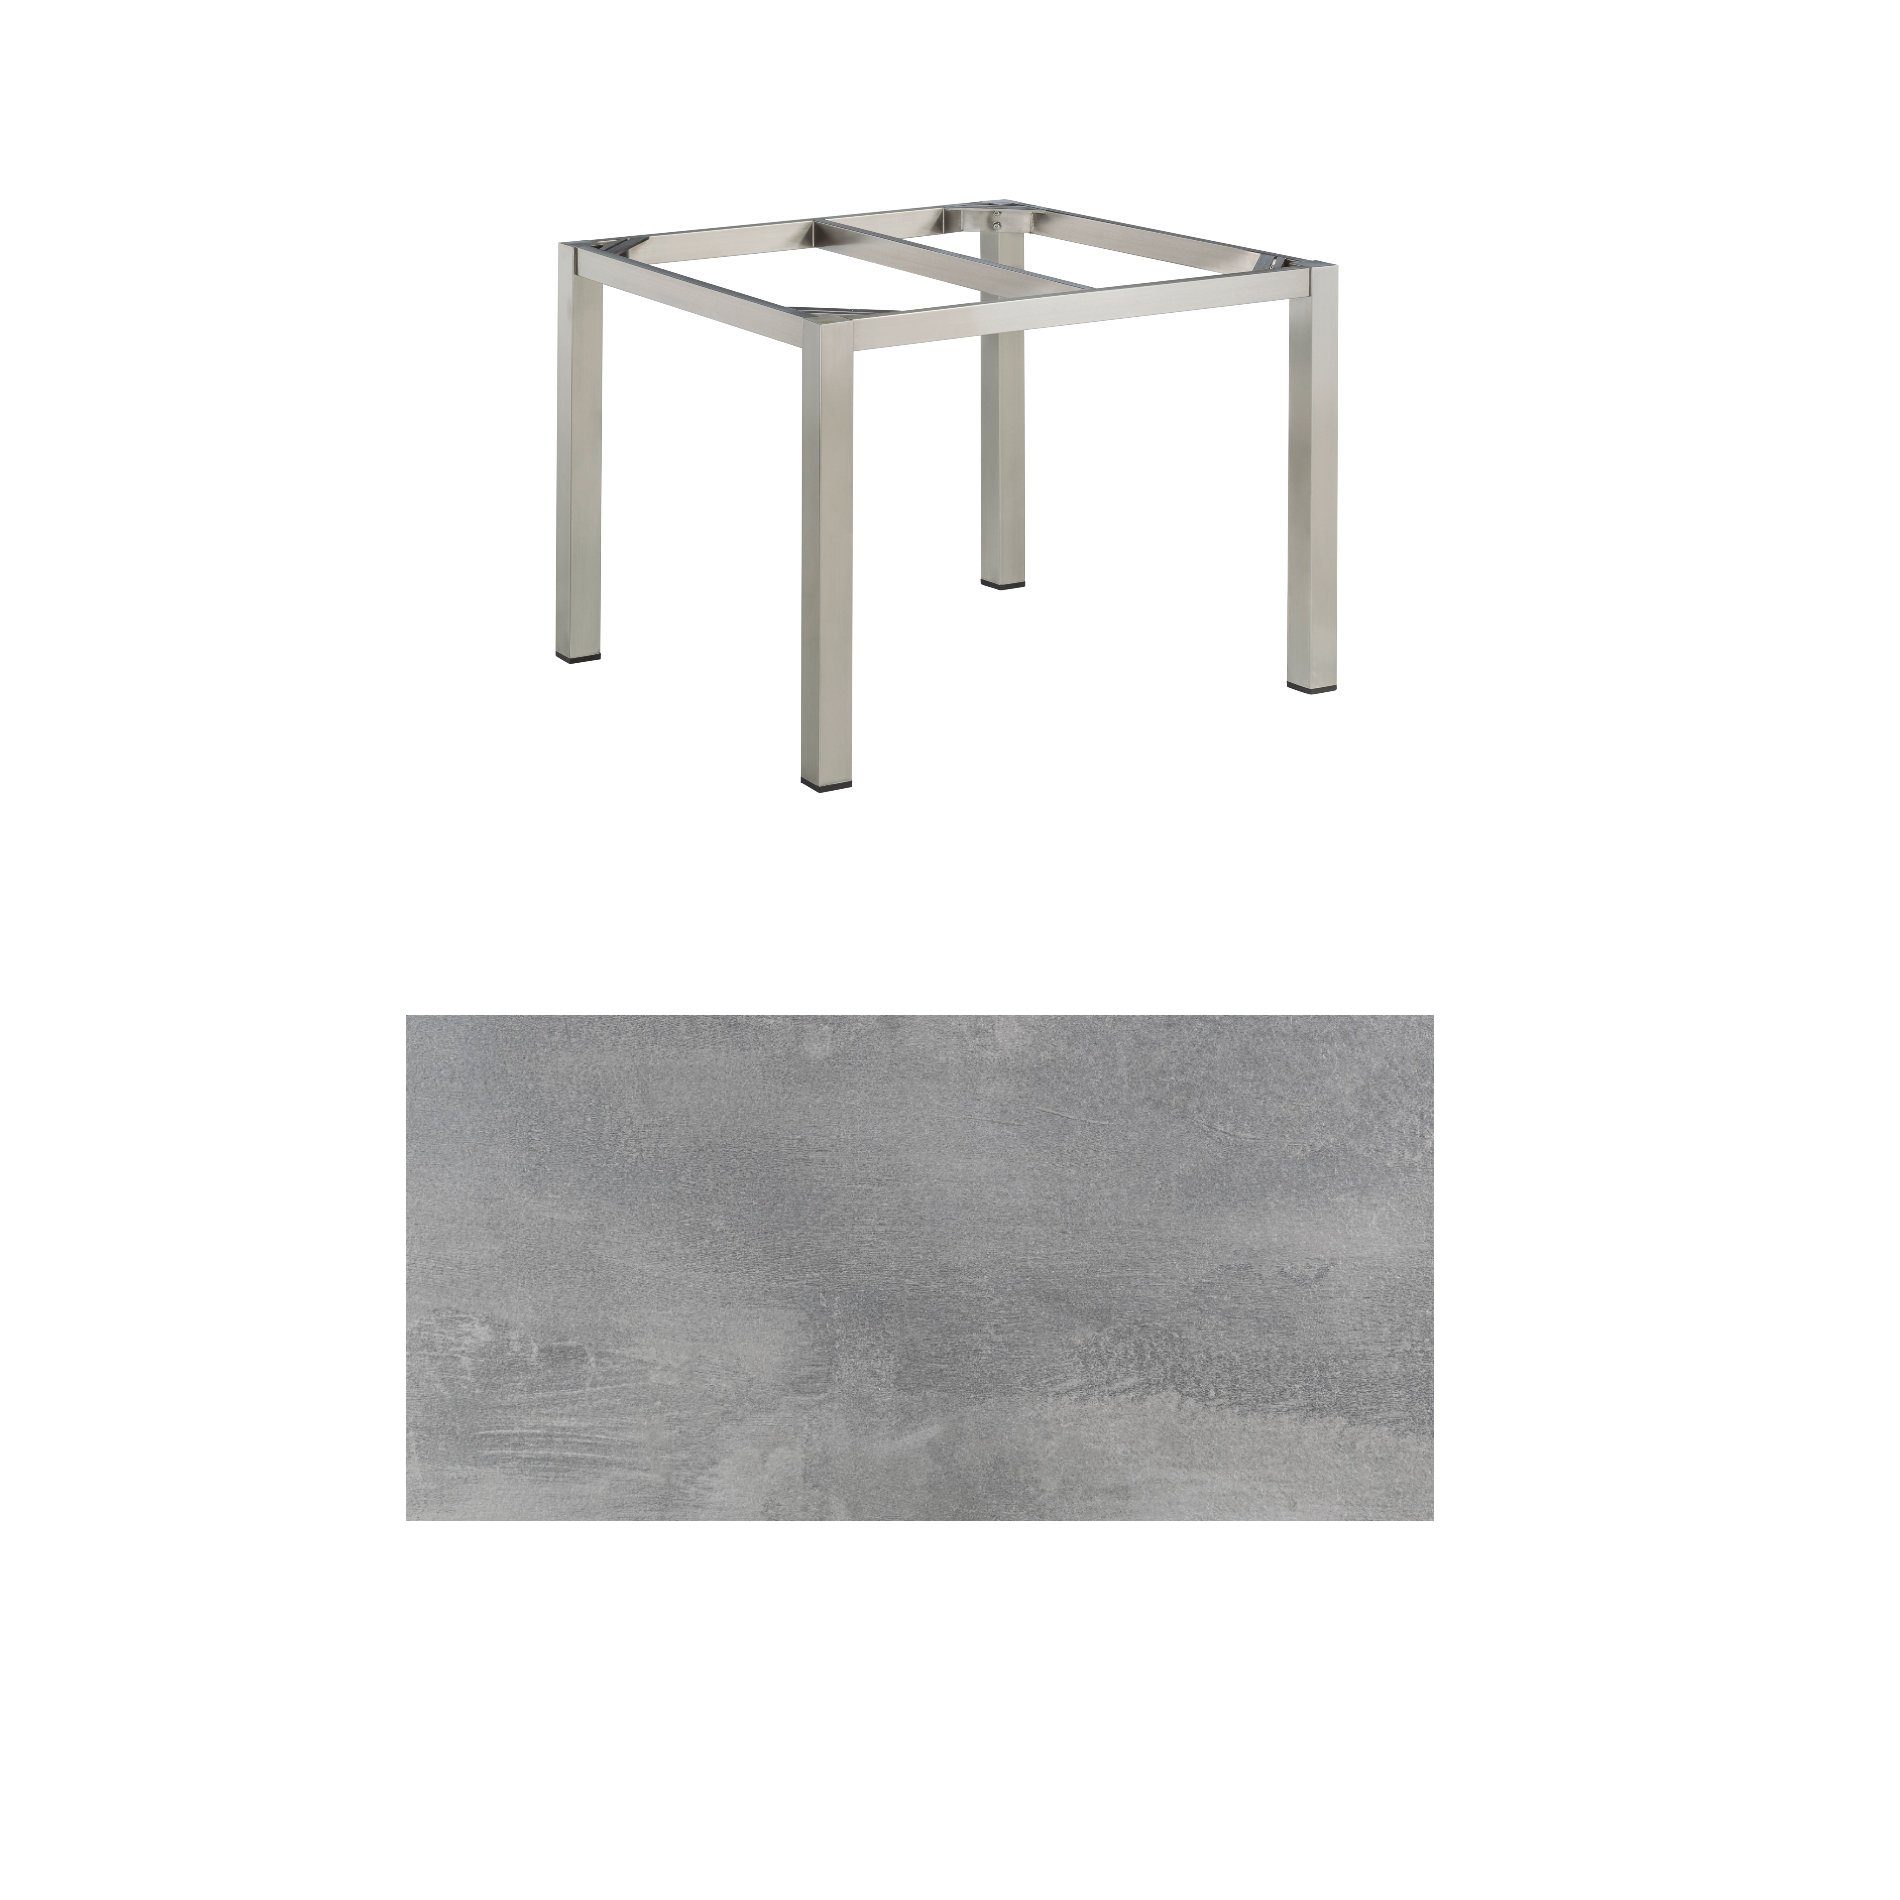 Kettler Gartentisch, Tischgestell 95x95cm "Cubic", Edelstahl, mit Tischplatte HPL silber-grau